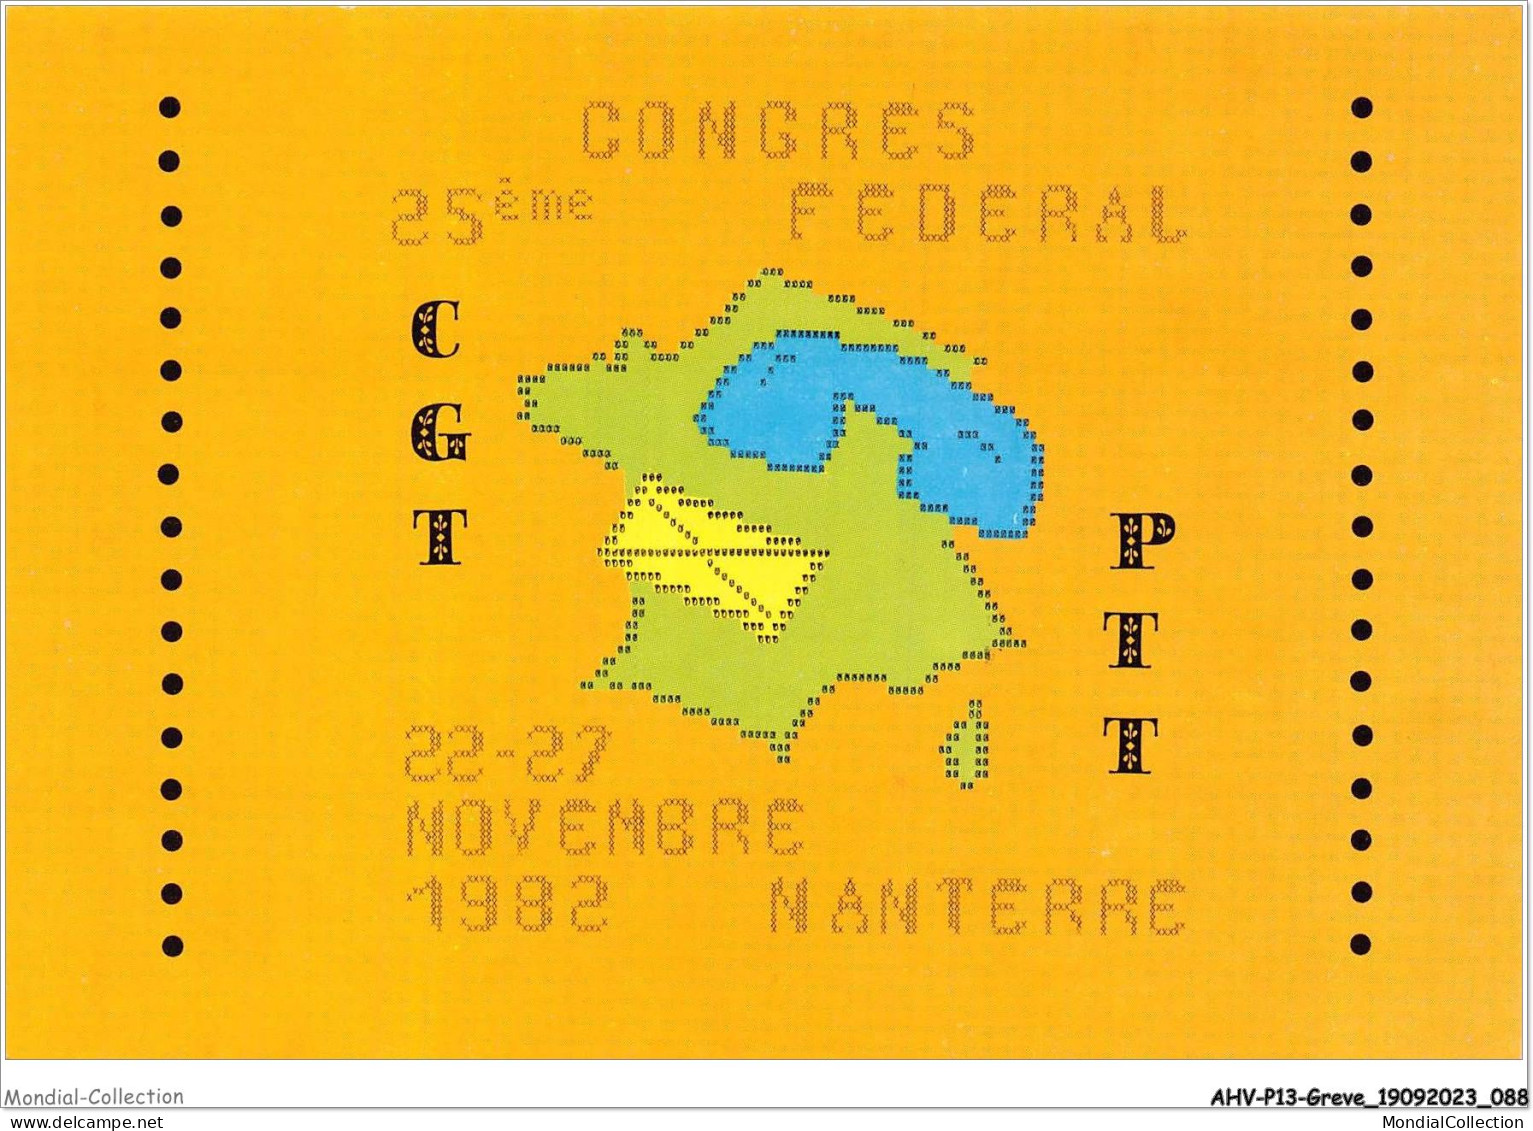 AHVP13-1158 - GREVE - CGT PTT 25è Congrès Féderal  Nanterre - 22 - 27 Novembre - Strikes